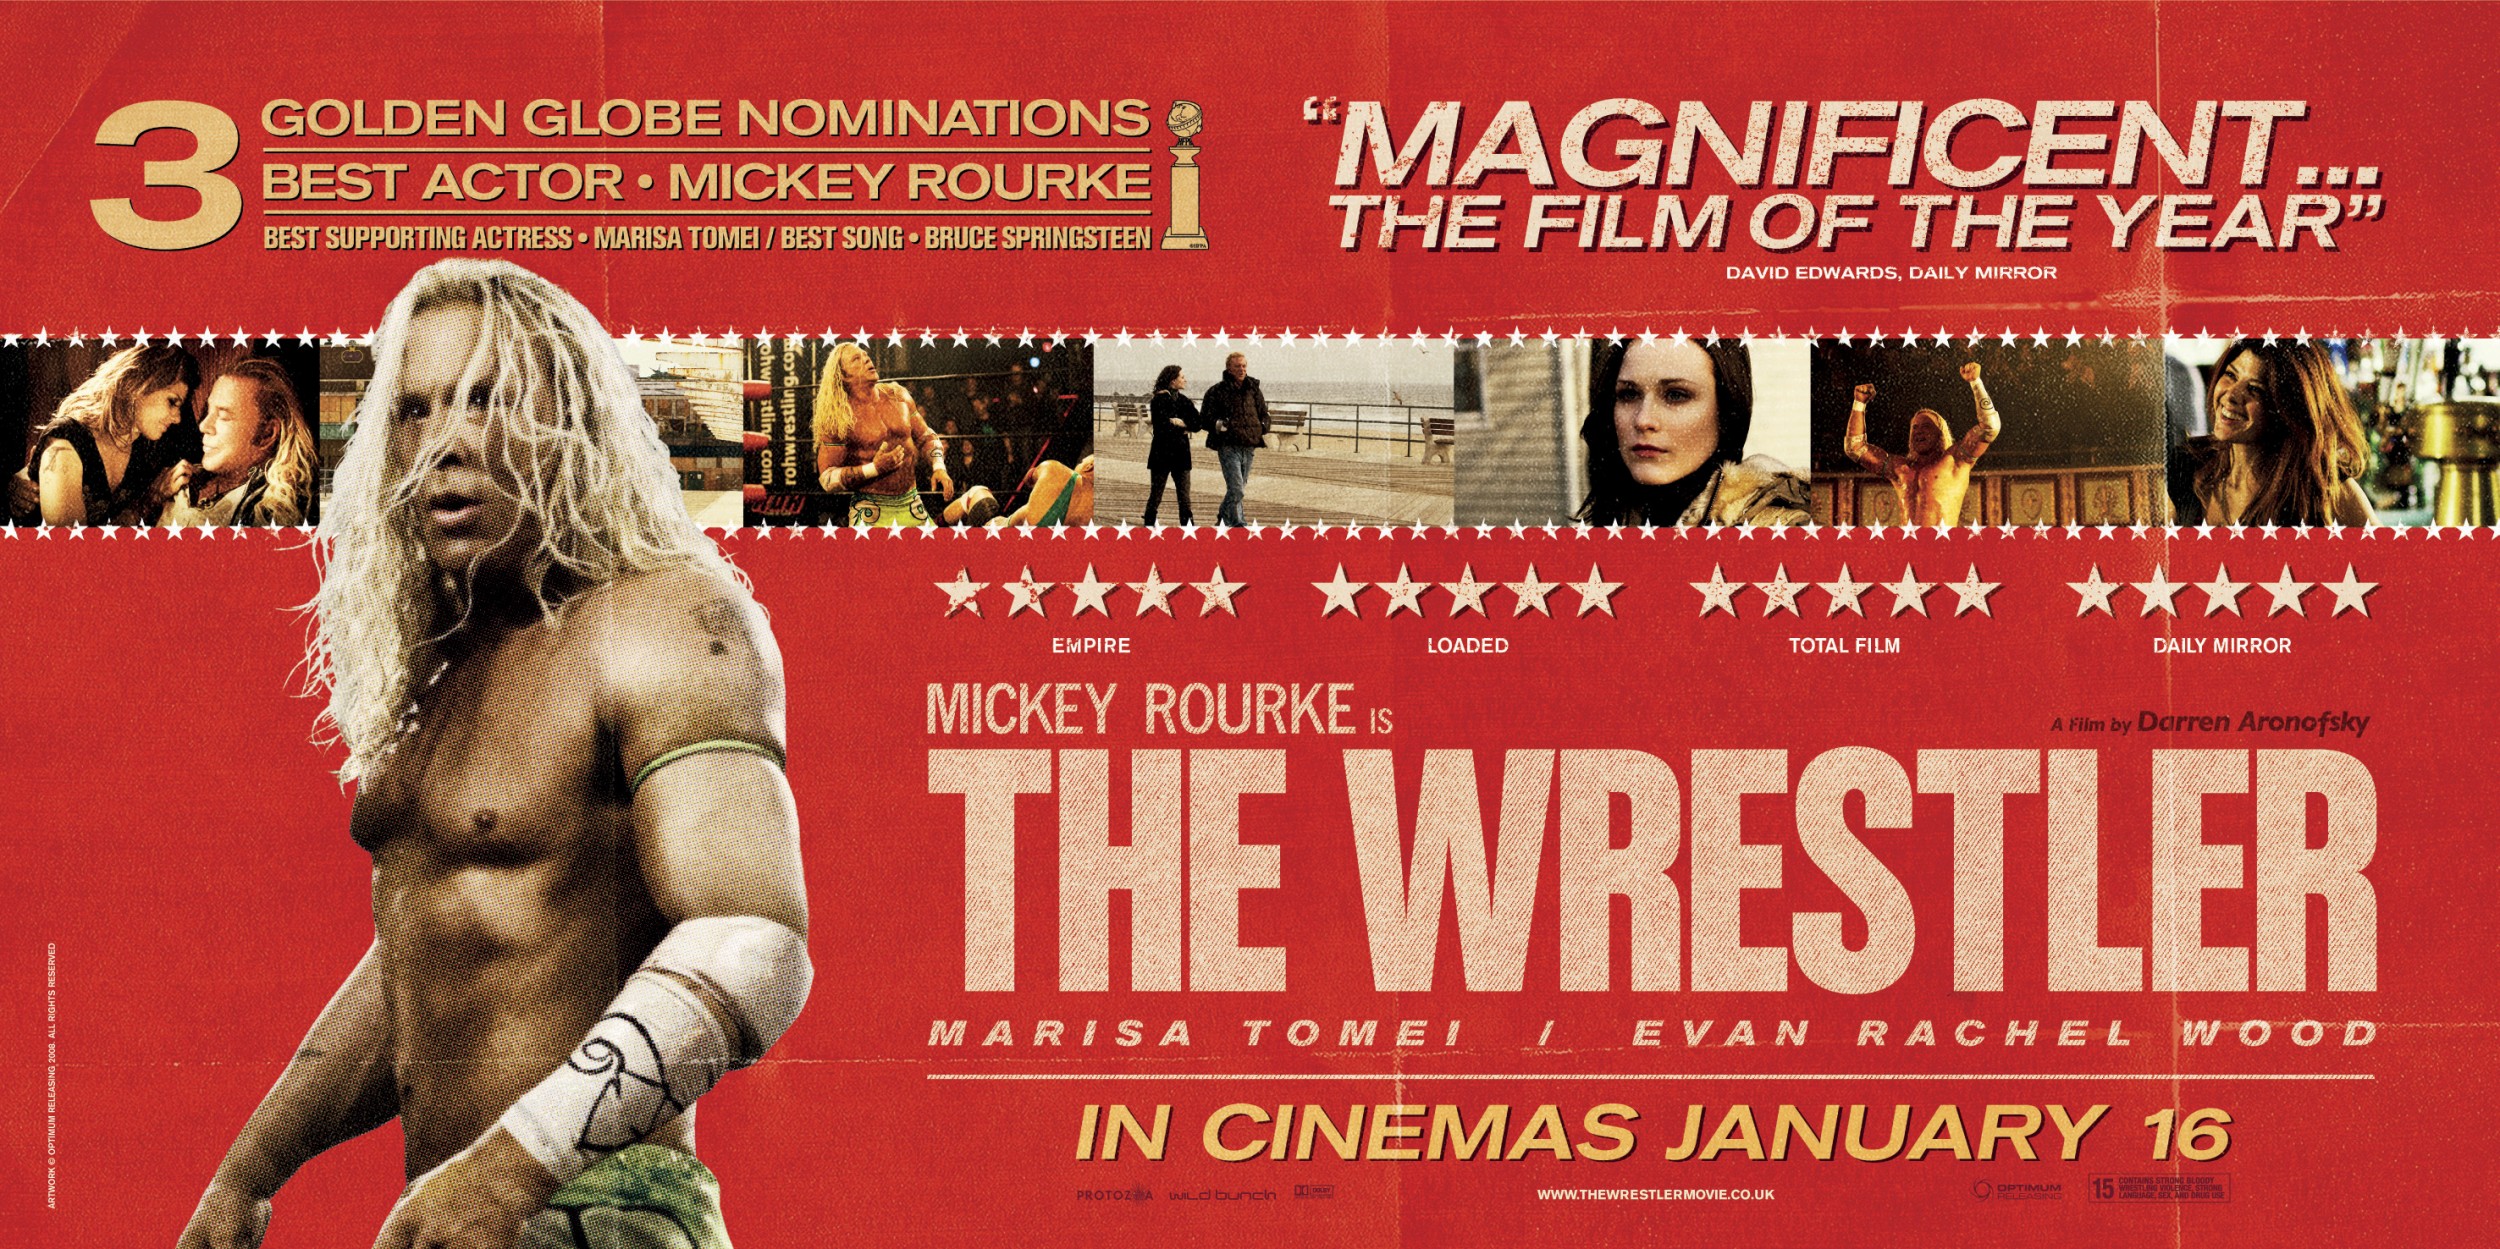 Mega Sized Movie Poster Image for The Wrestler (#3 of 4)